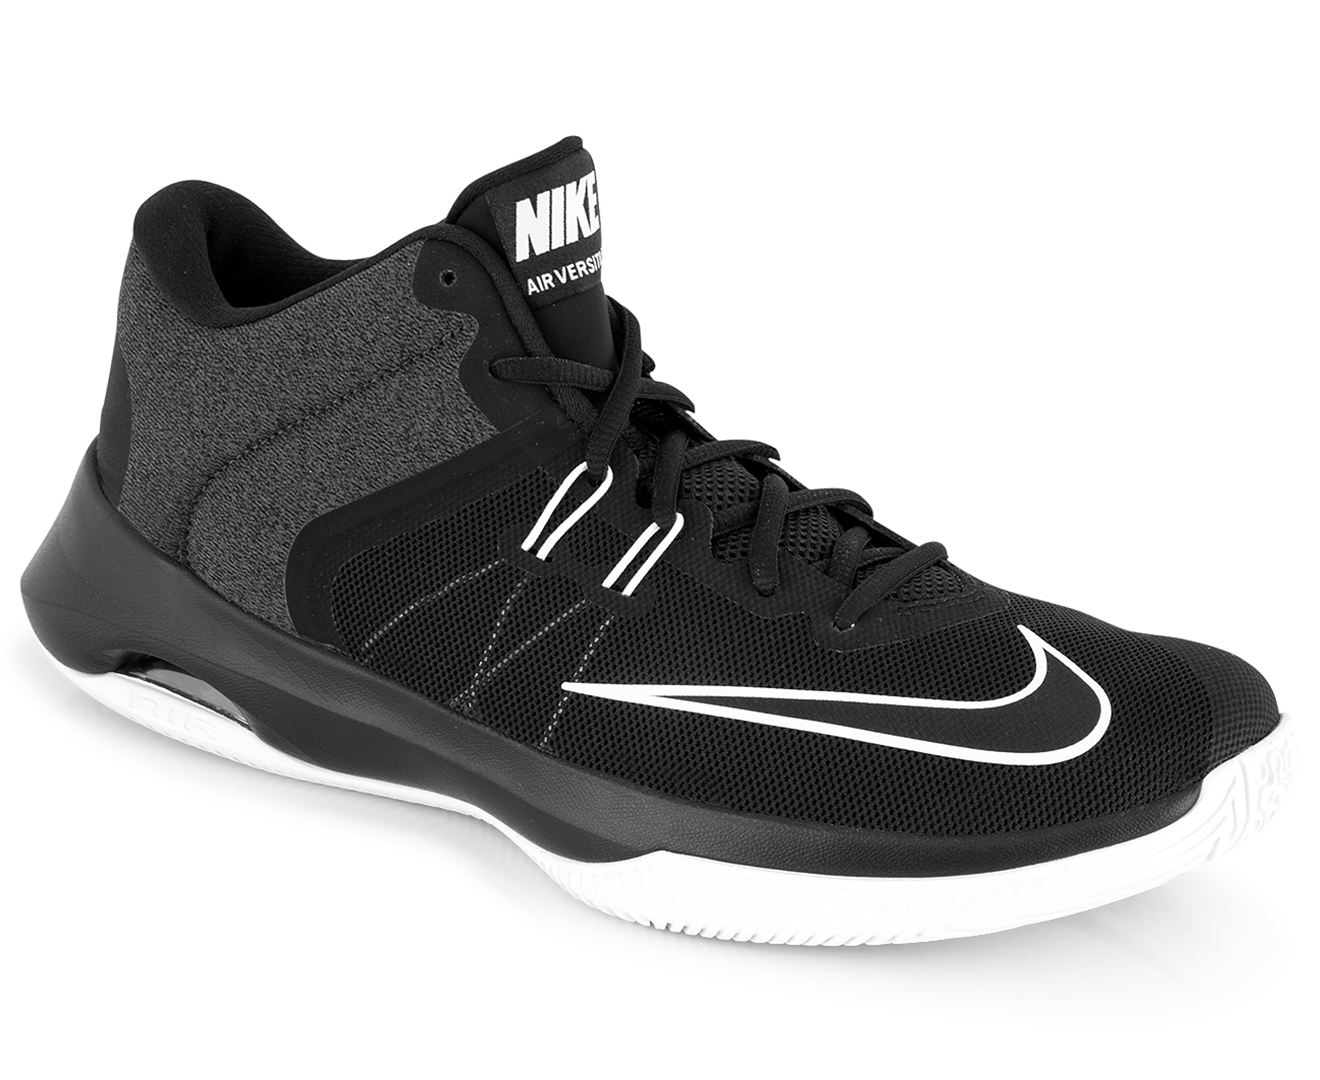 Nike Men's Air Versitile II Basketball Shoe - Black/White | Catch.com.au